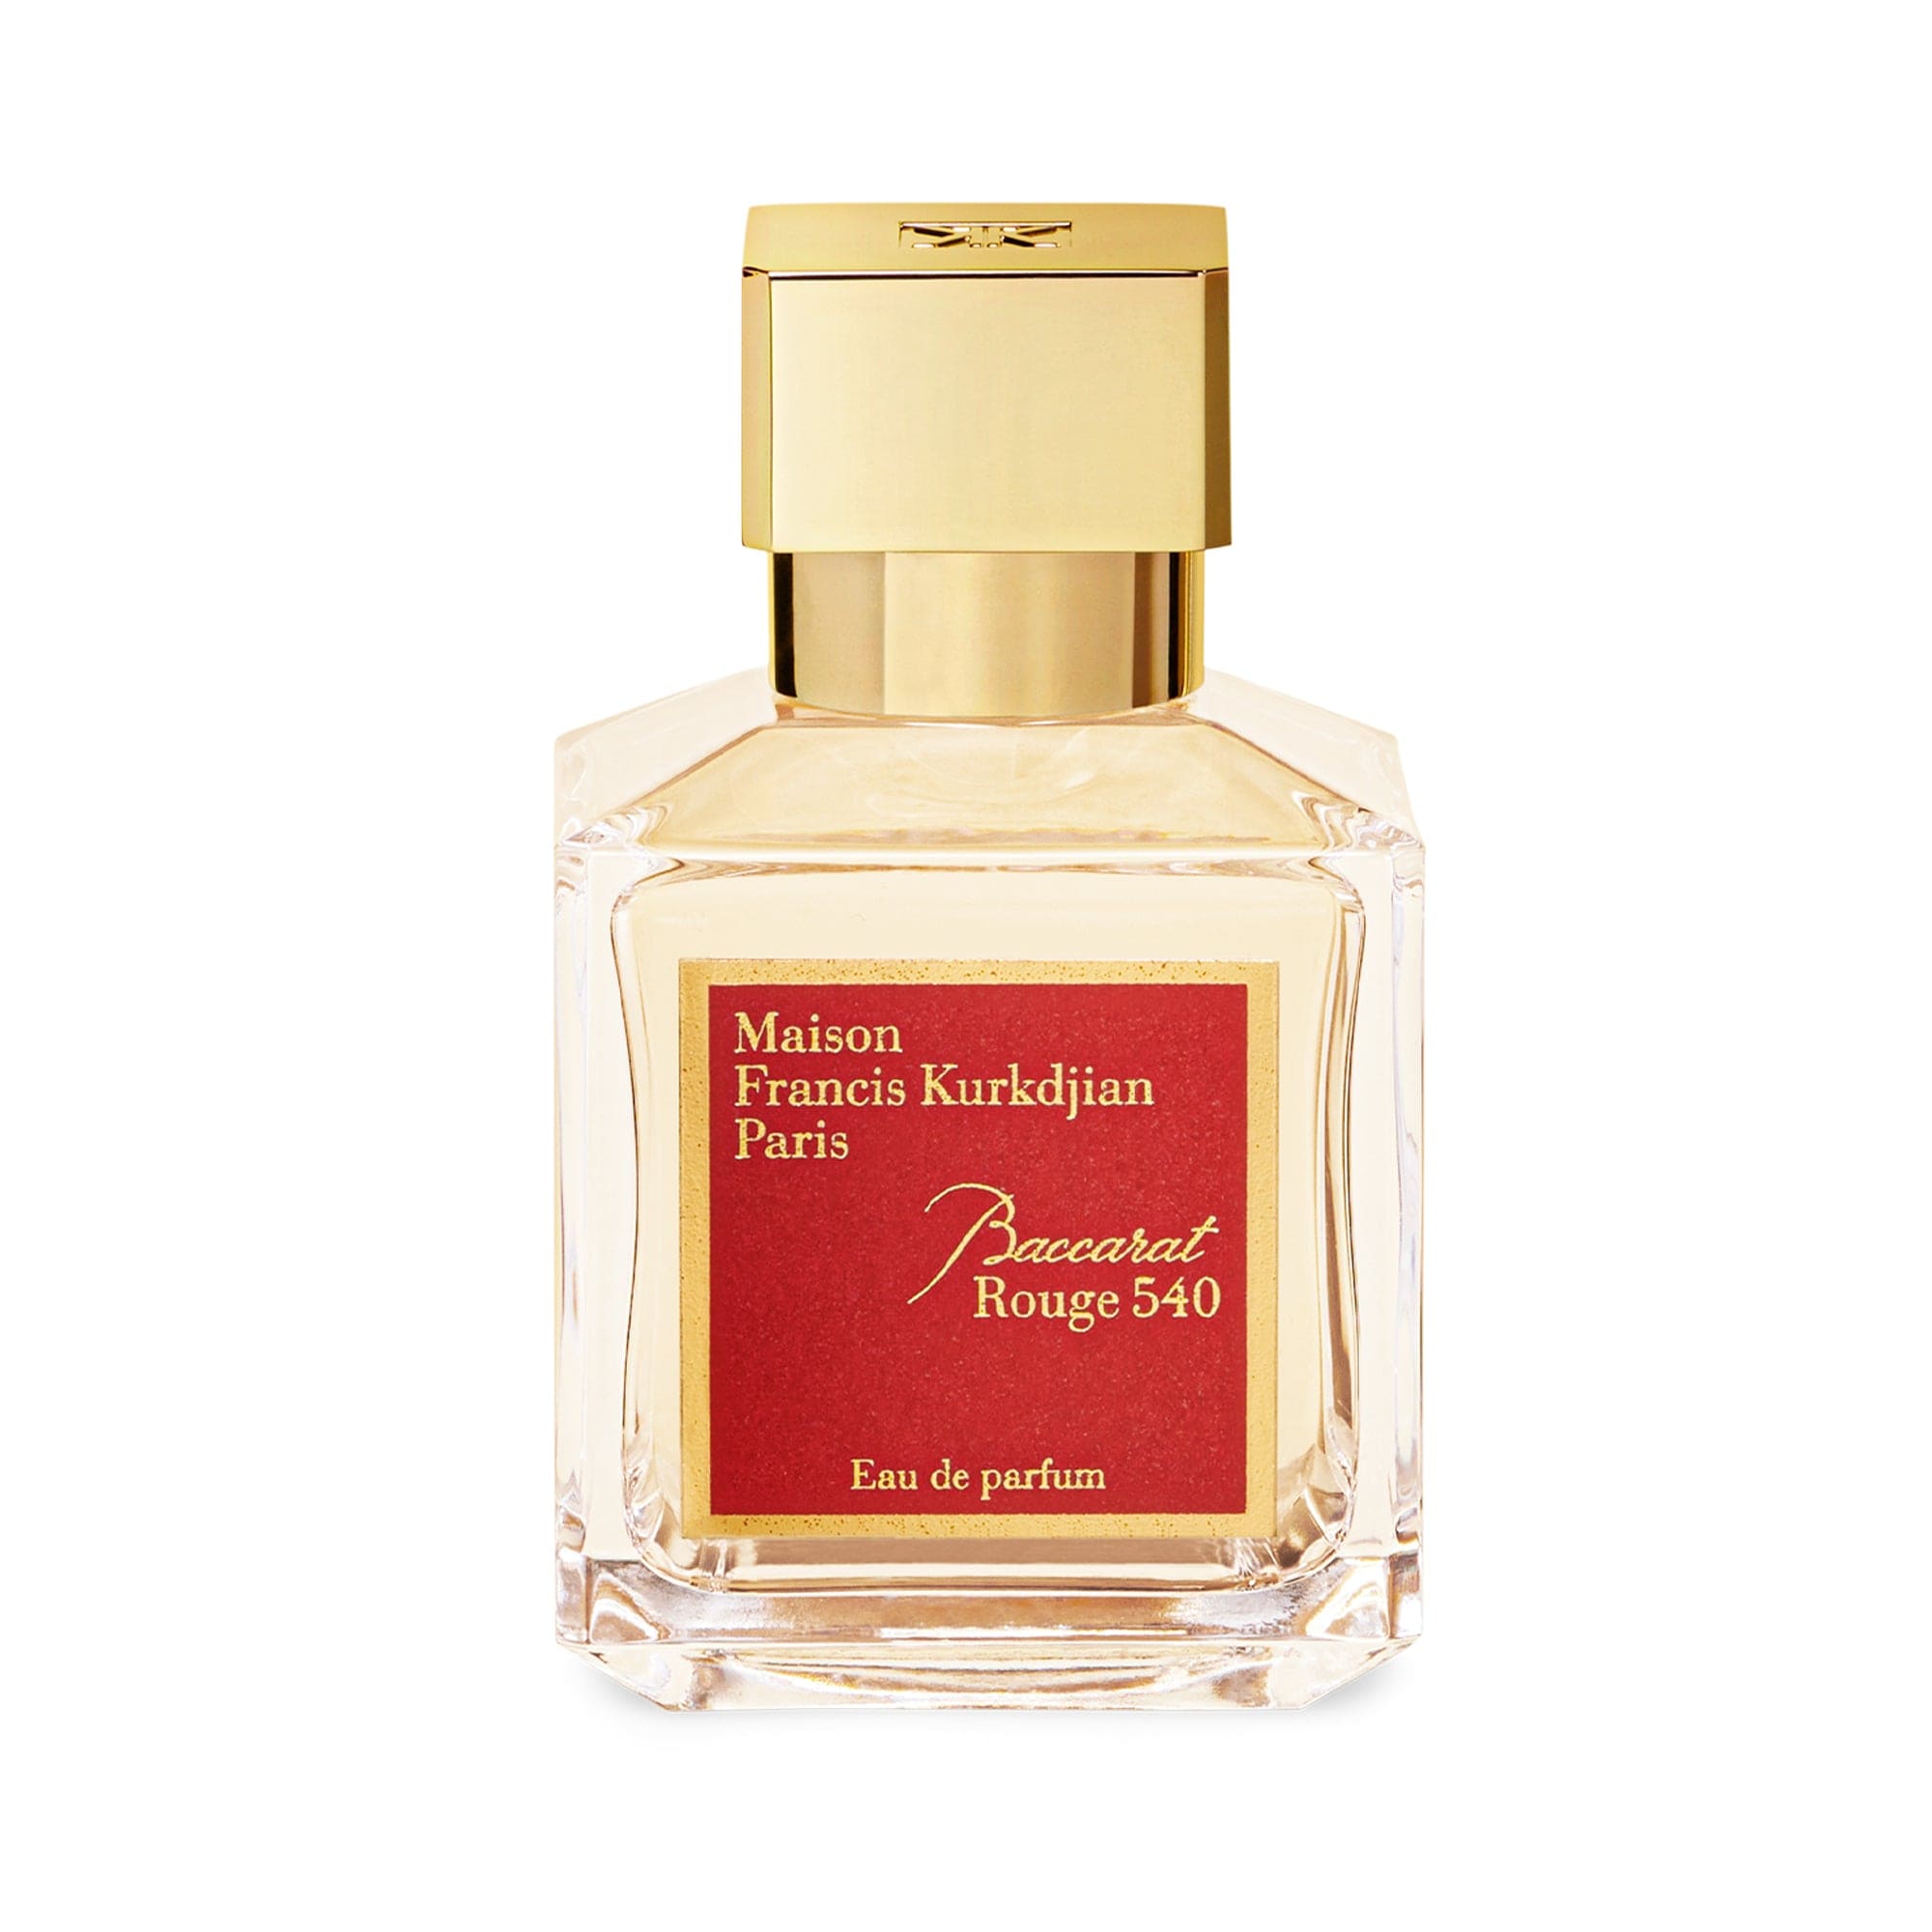 Baccarat Rouge 540 Maison Francis Kurkdjian Eau de Parfum